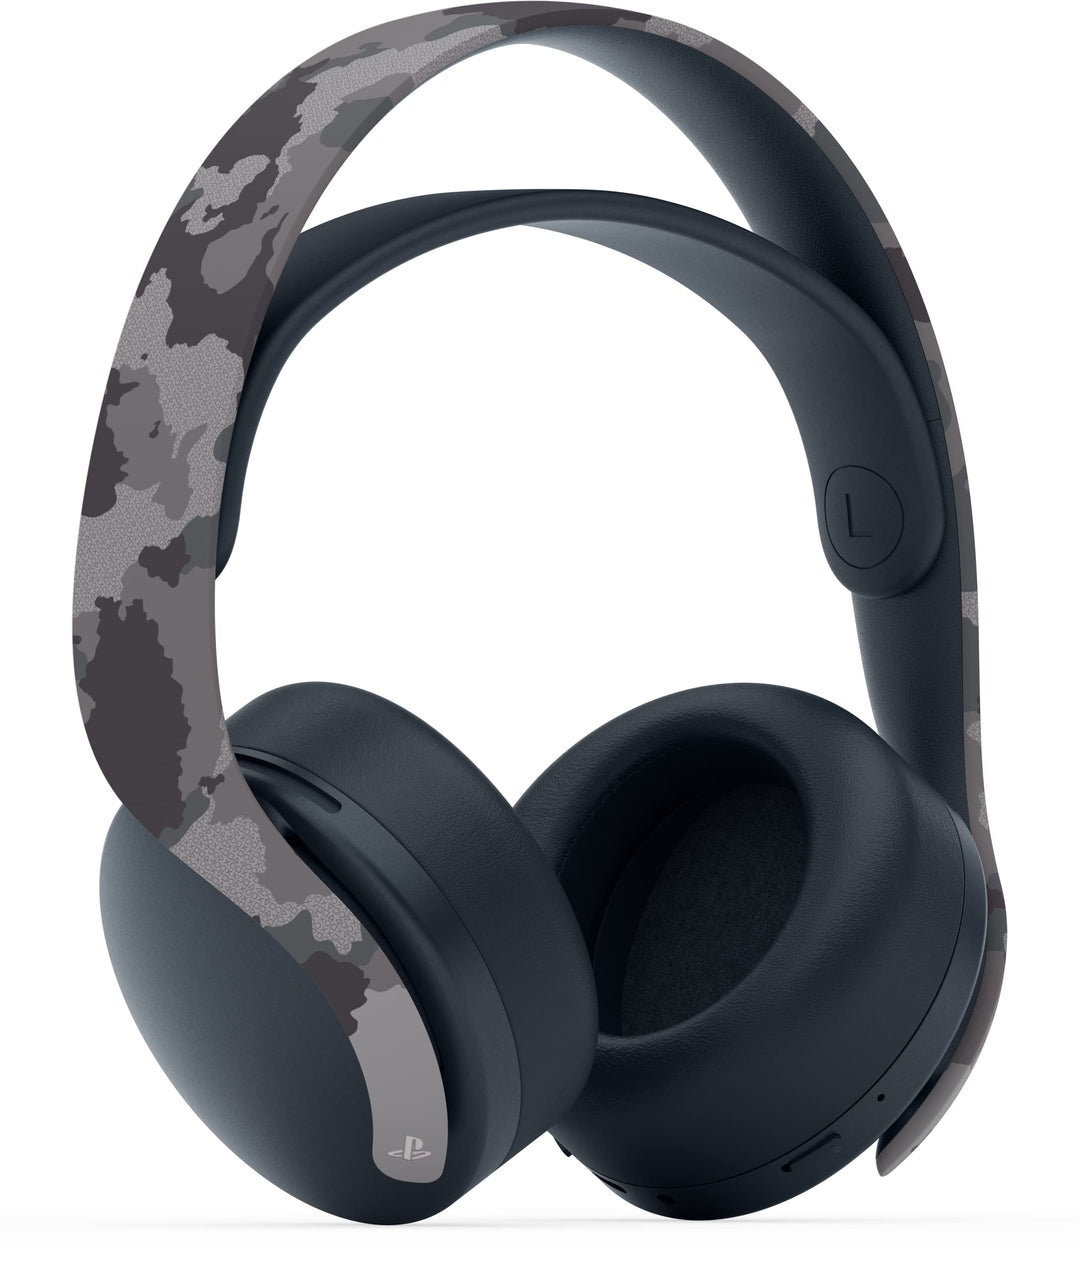 Pulse 3D Wireless Headset - Grey Camo (PlayStation 5)